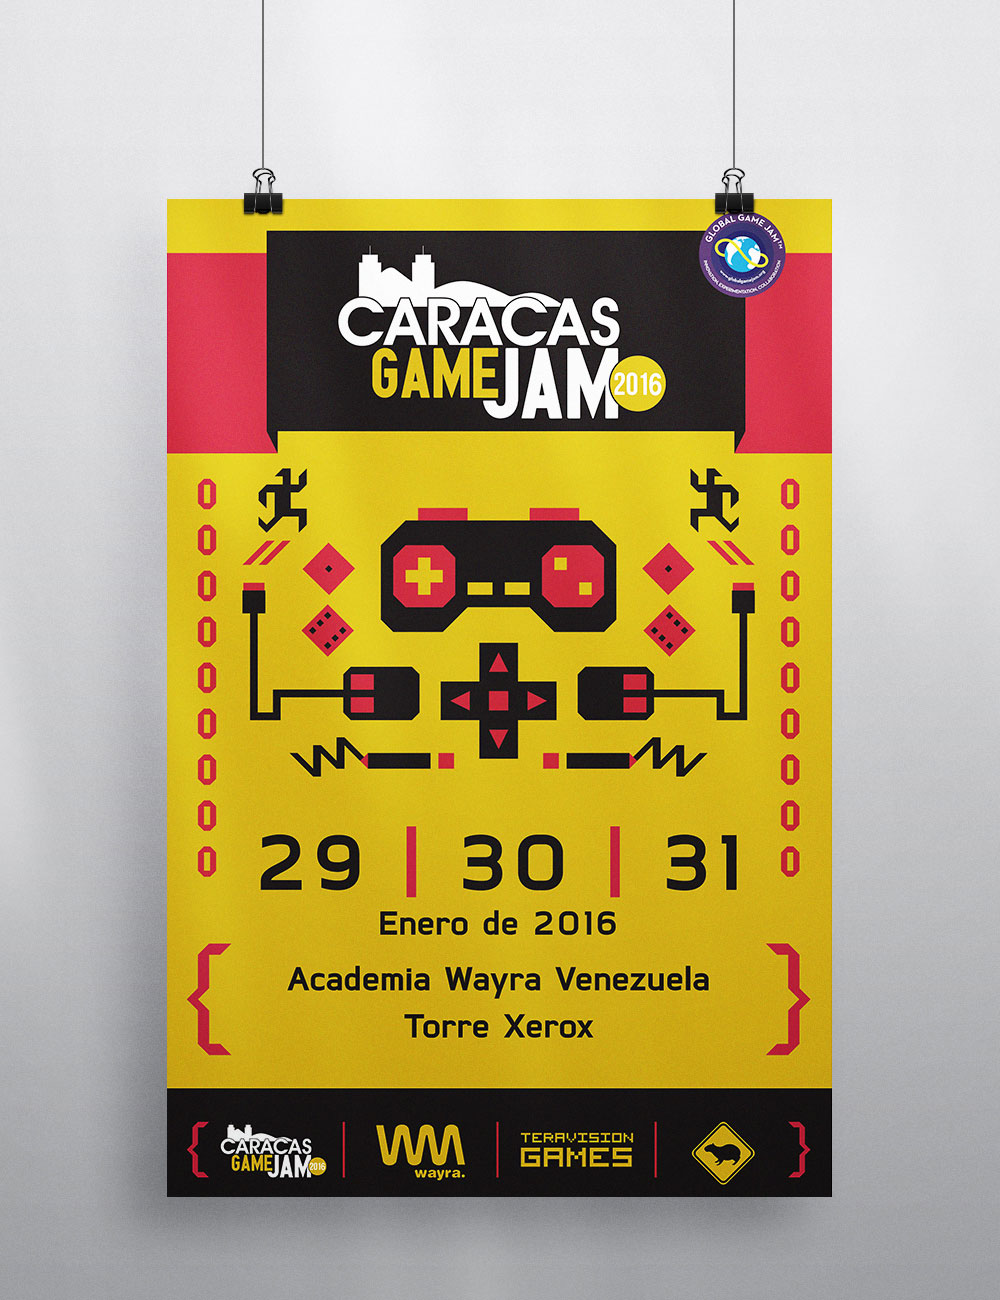 Caracas Game Jam 2016